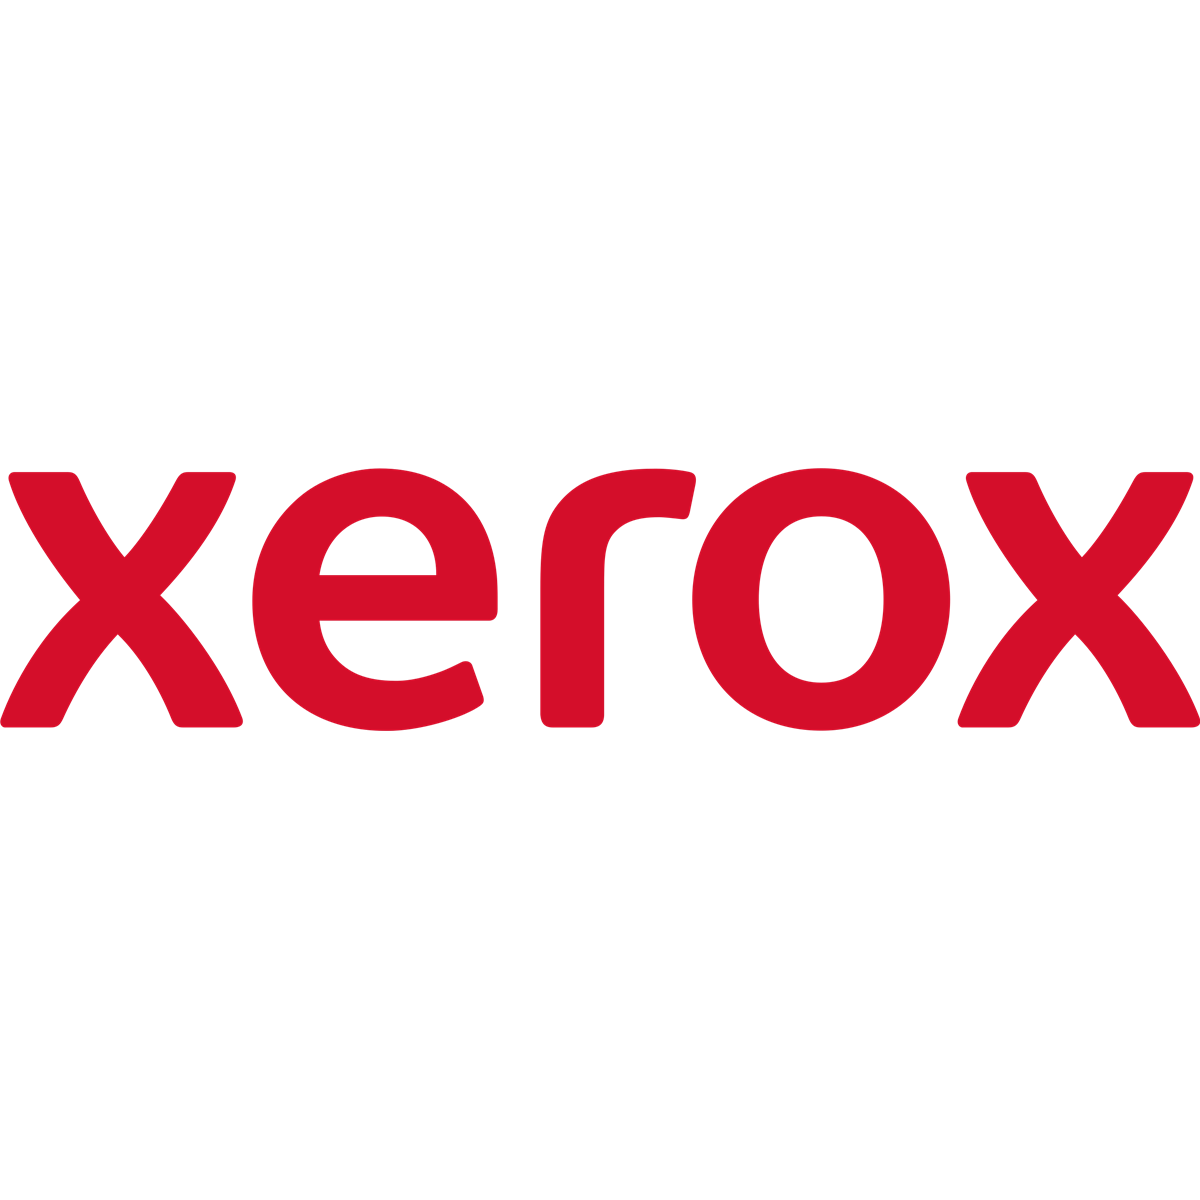 Xerox 016-1890-00 - Laser - 229 x 508 x 178 mm - Black - 1.81 kg